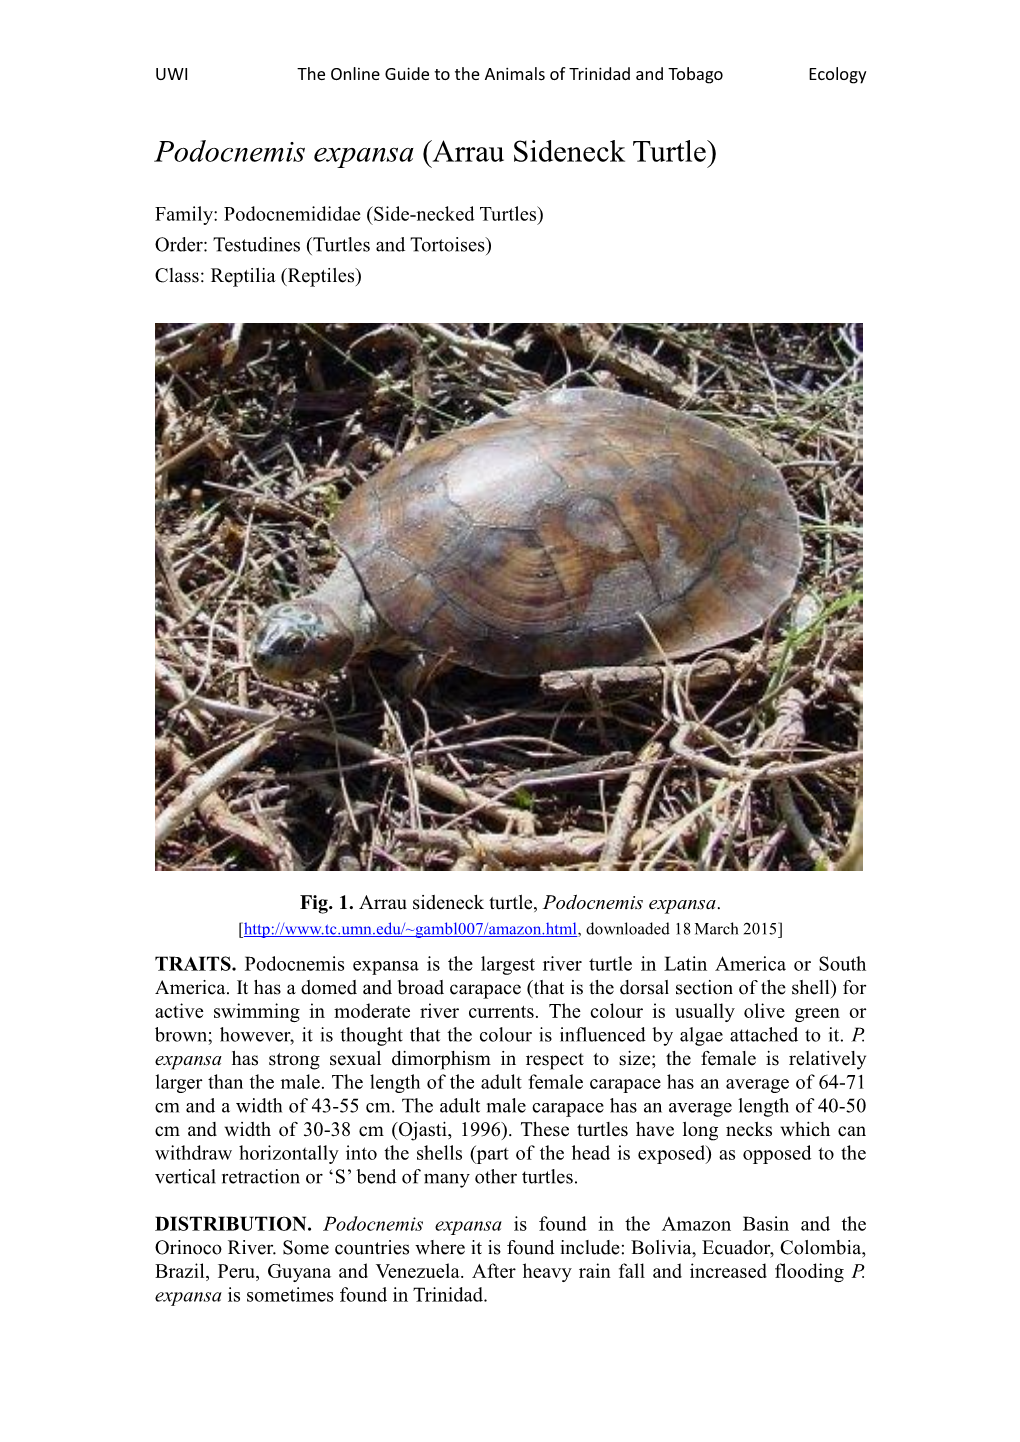 Podocnemis Expansa (Arrau Sideneck Turtle)